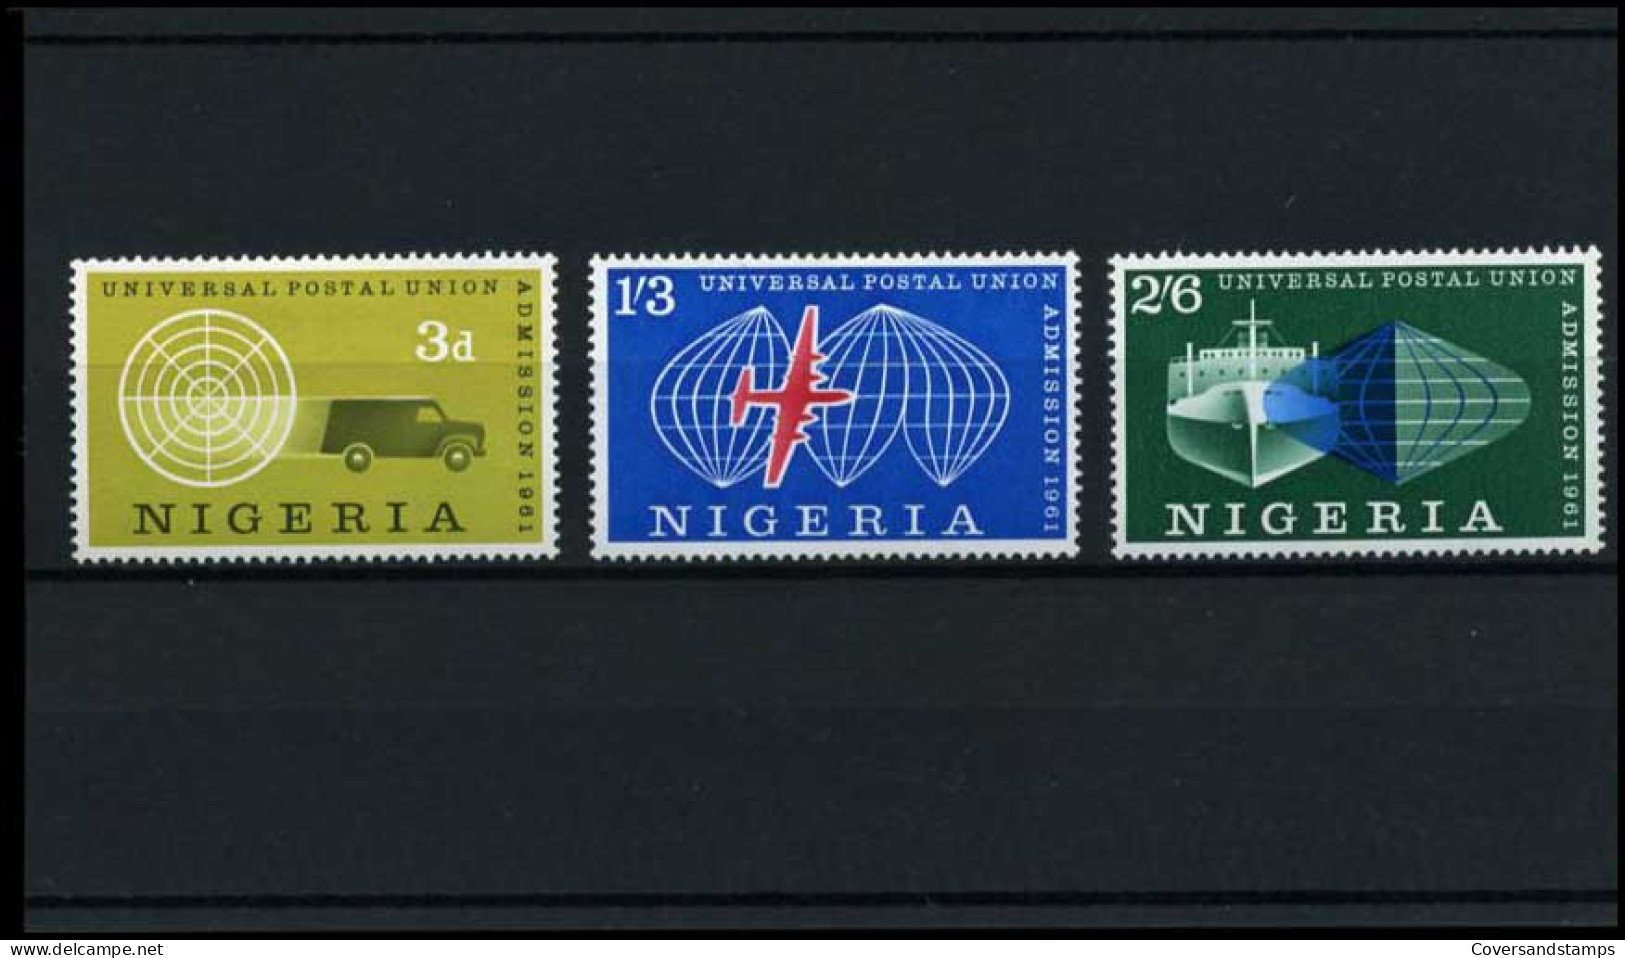 Nigeria - Universal Postal Union - Post